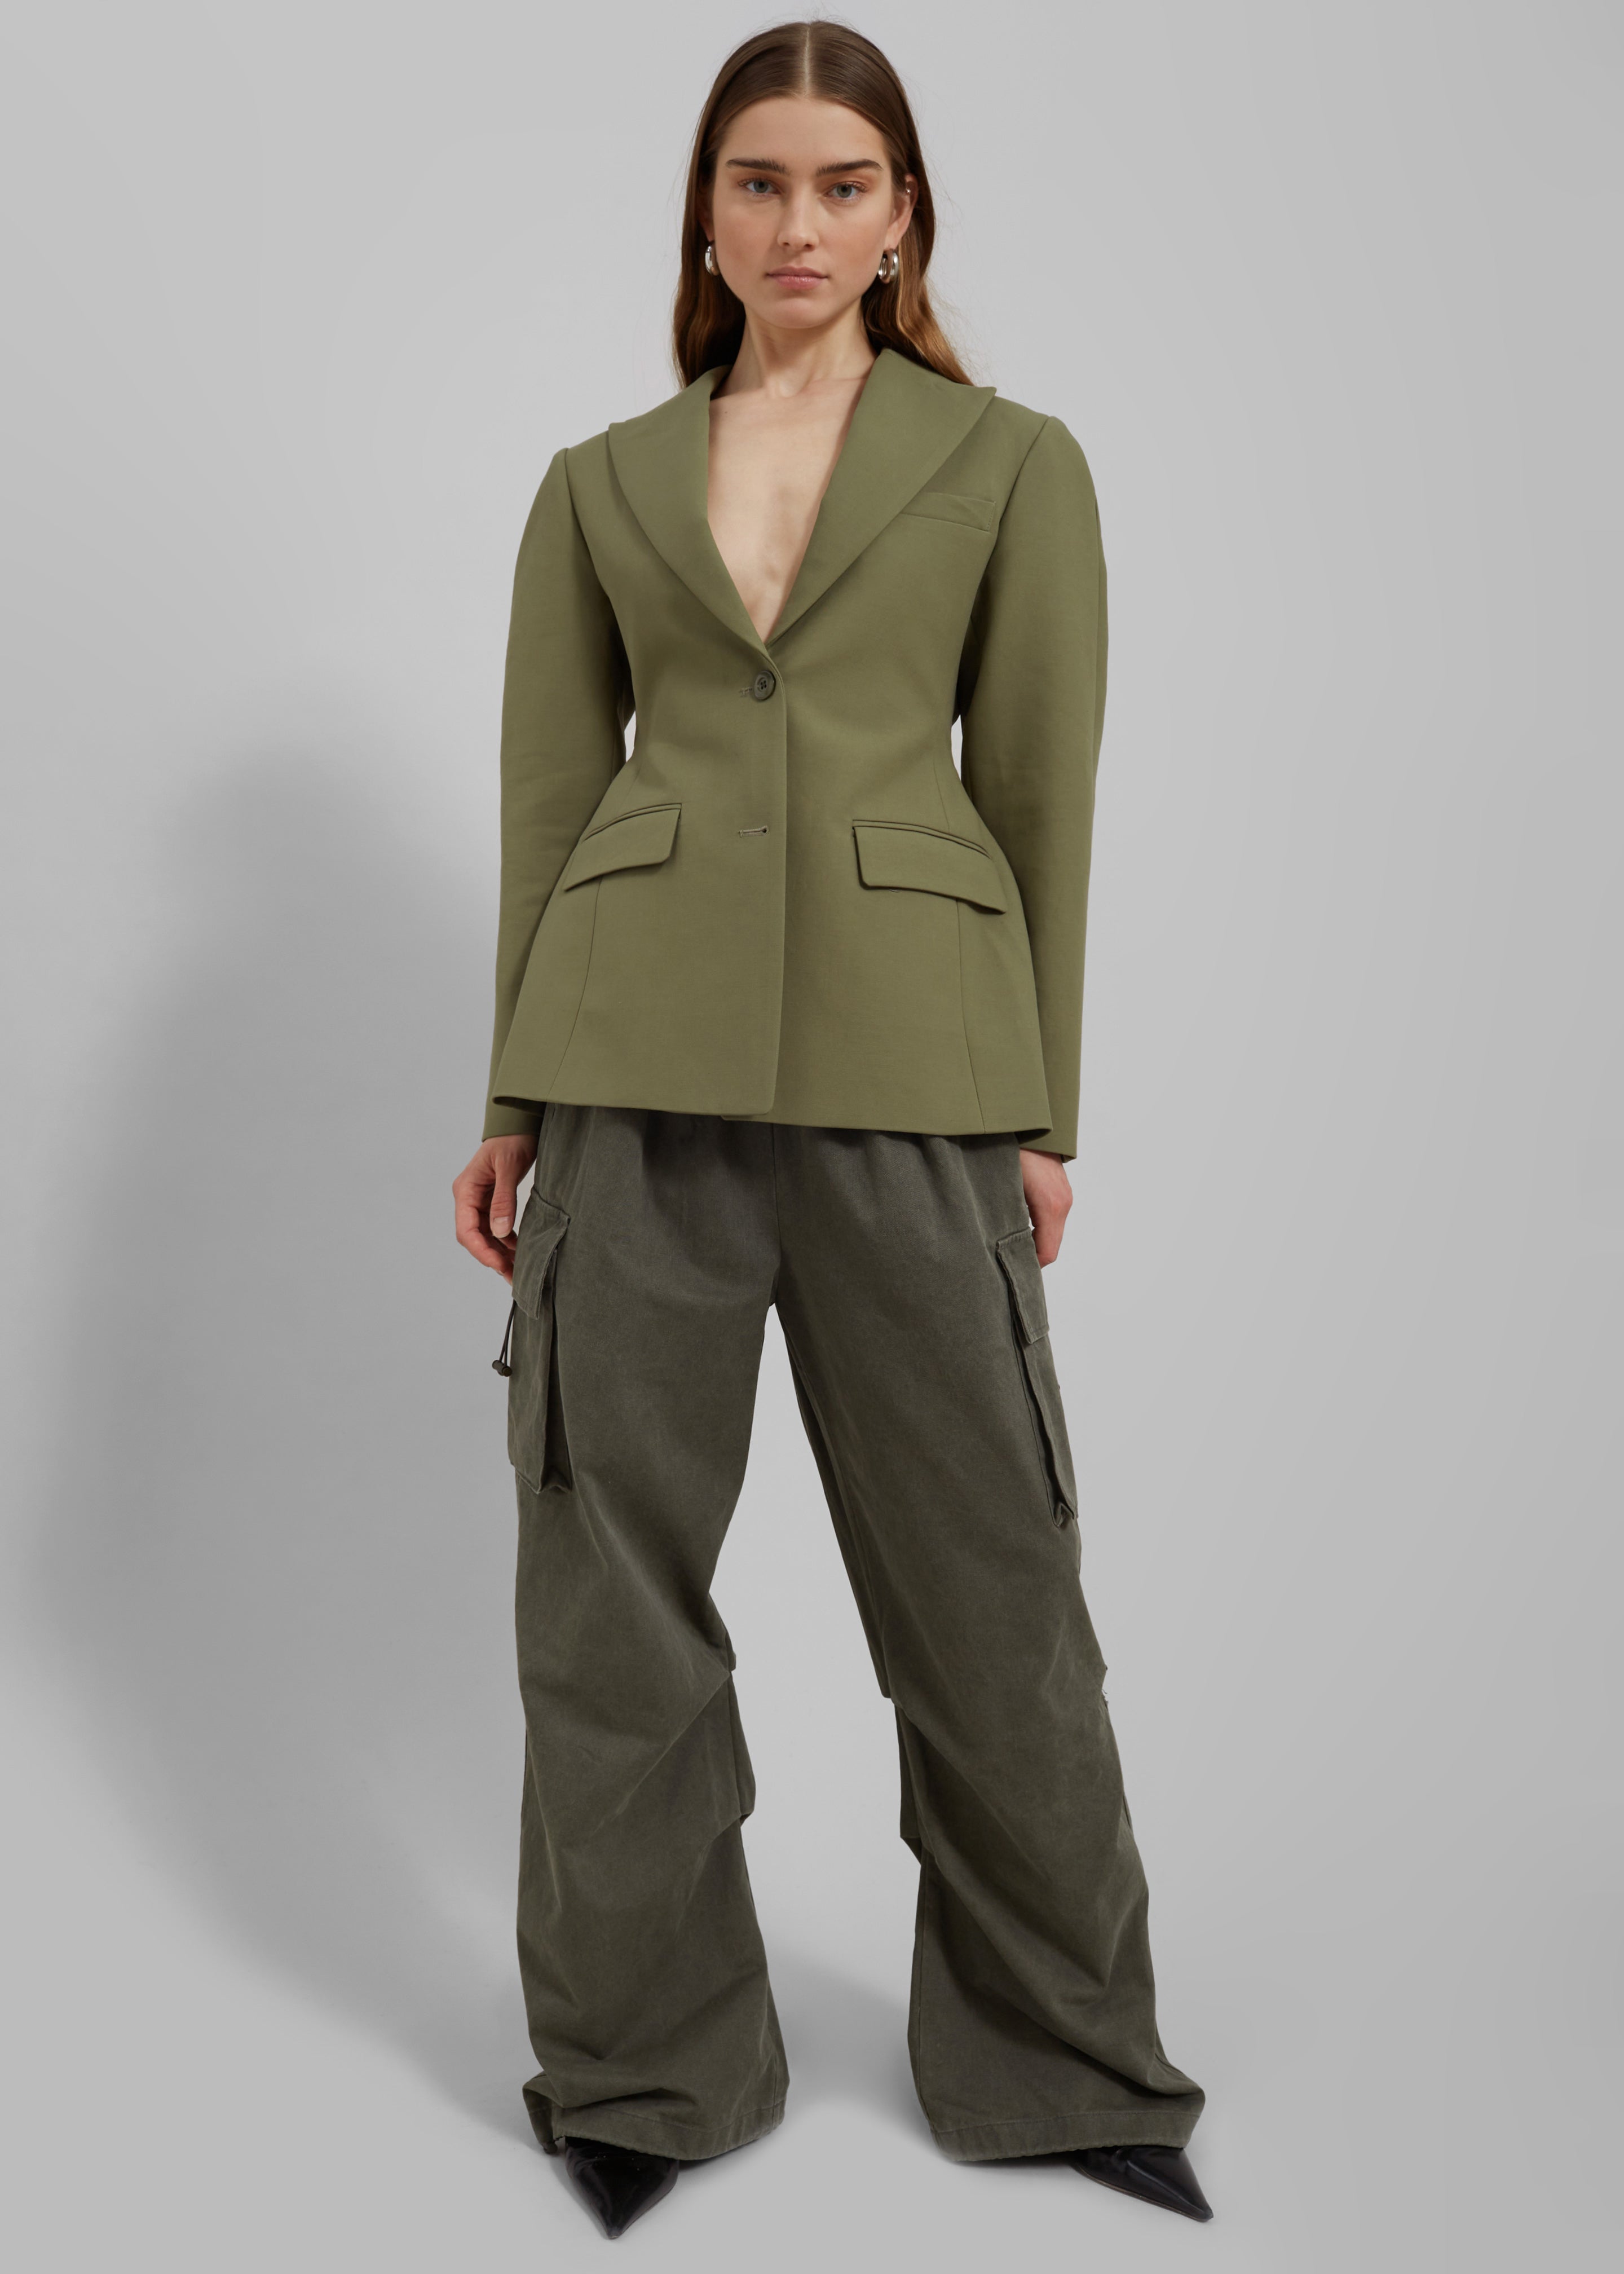 Women's Coats, Jackets, Trench & Blazer – Page 3 – Frankie Shop Europe